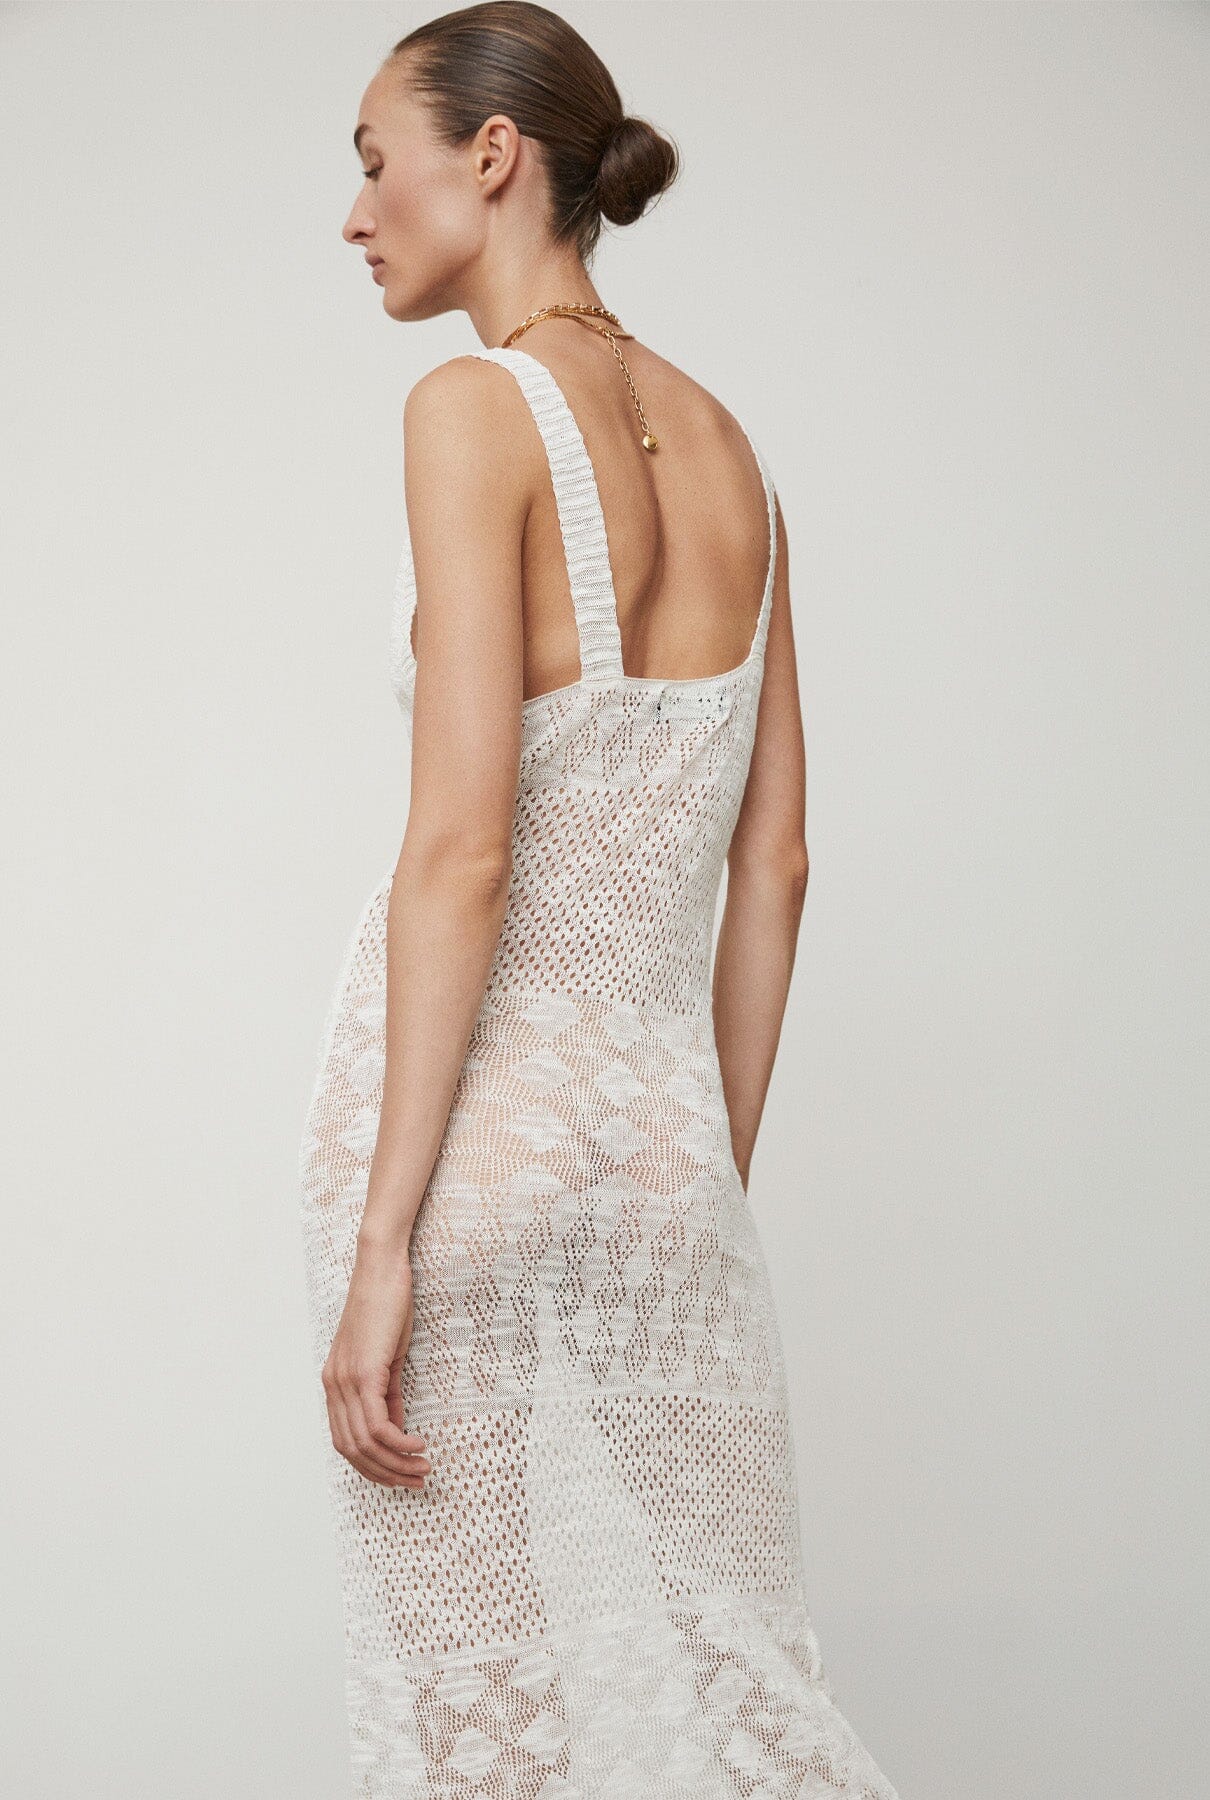 Malibu Dress Dress Alex Riviere Studio 